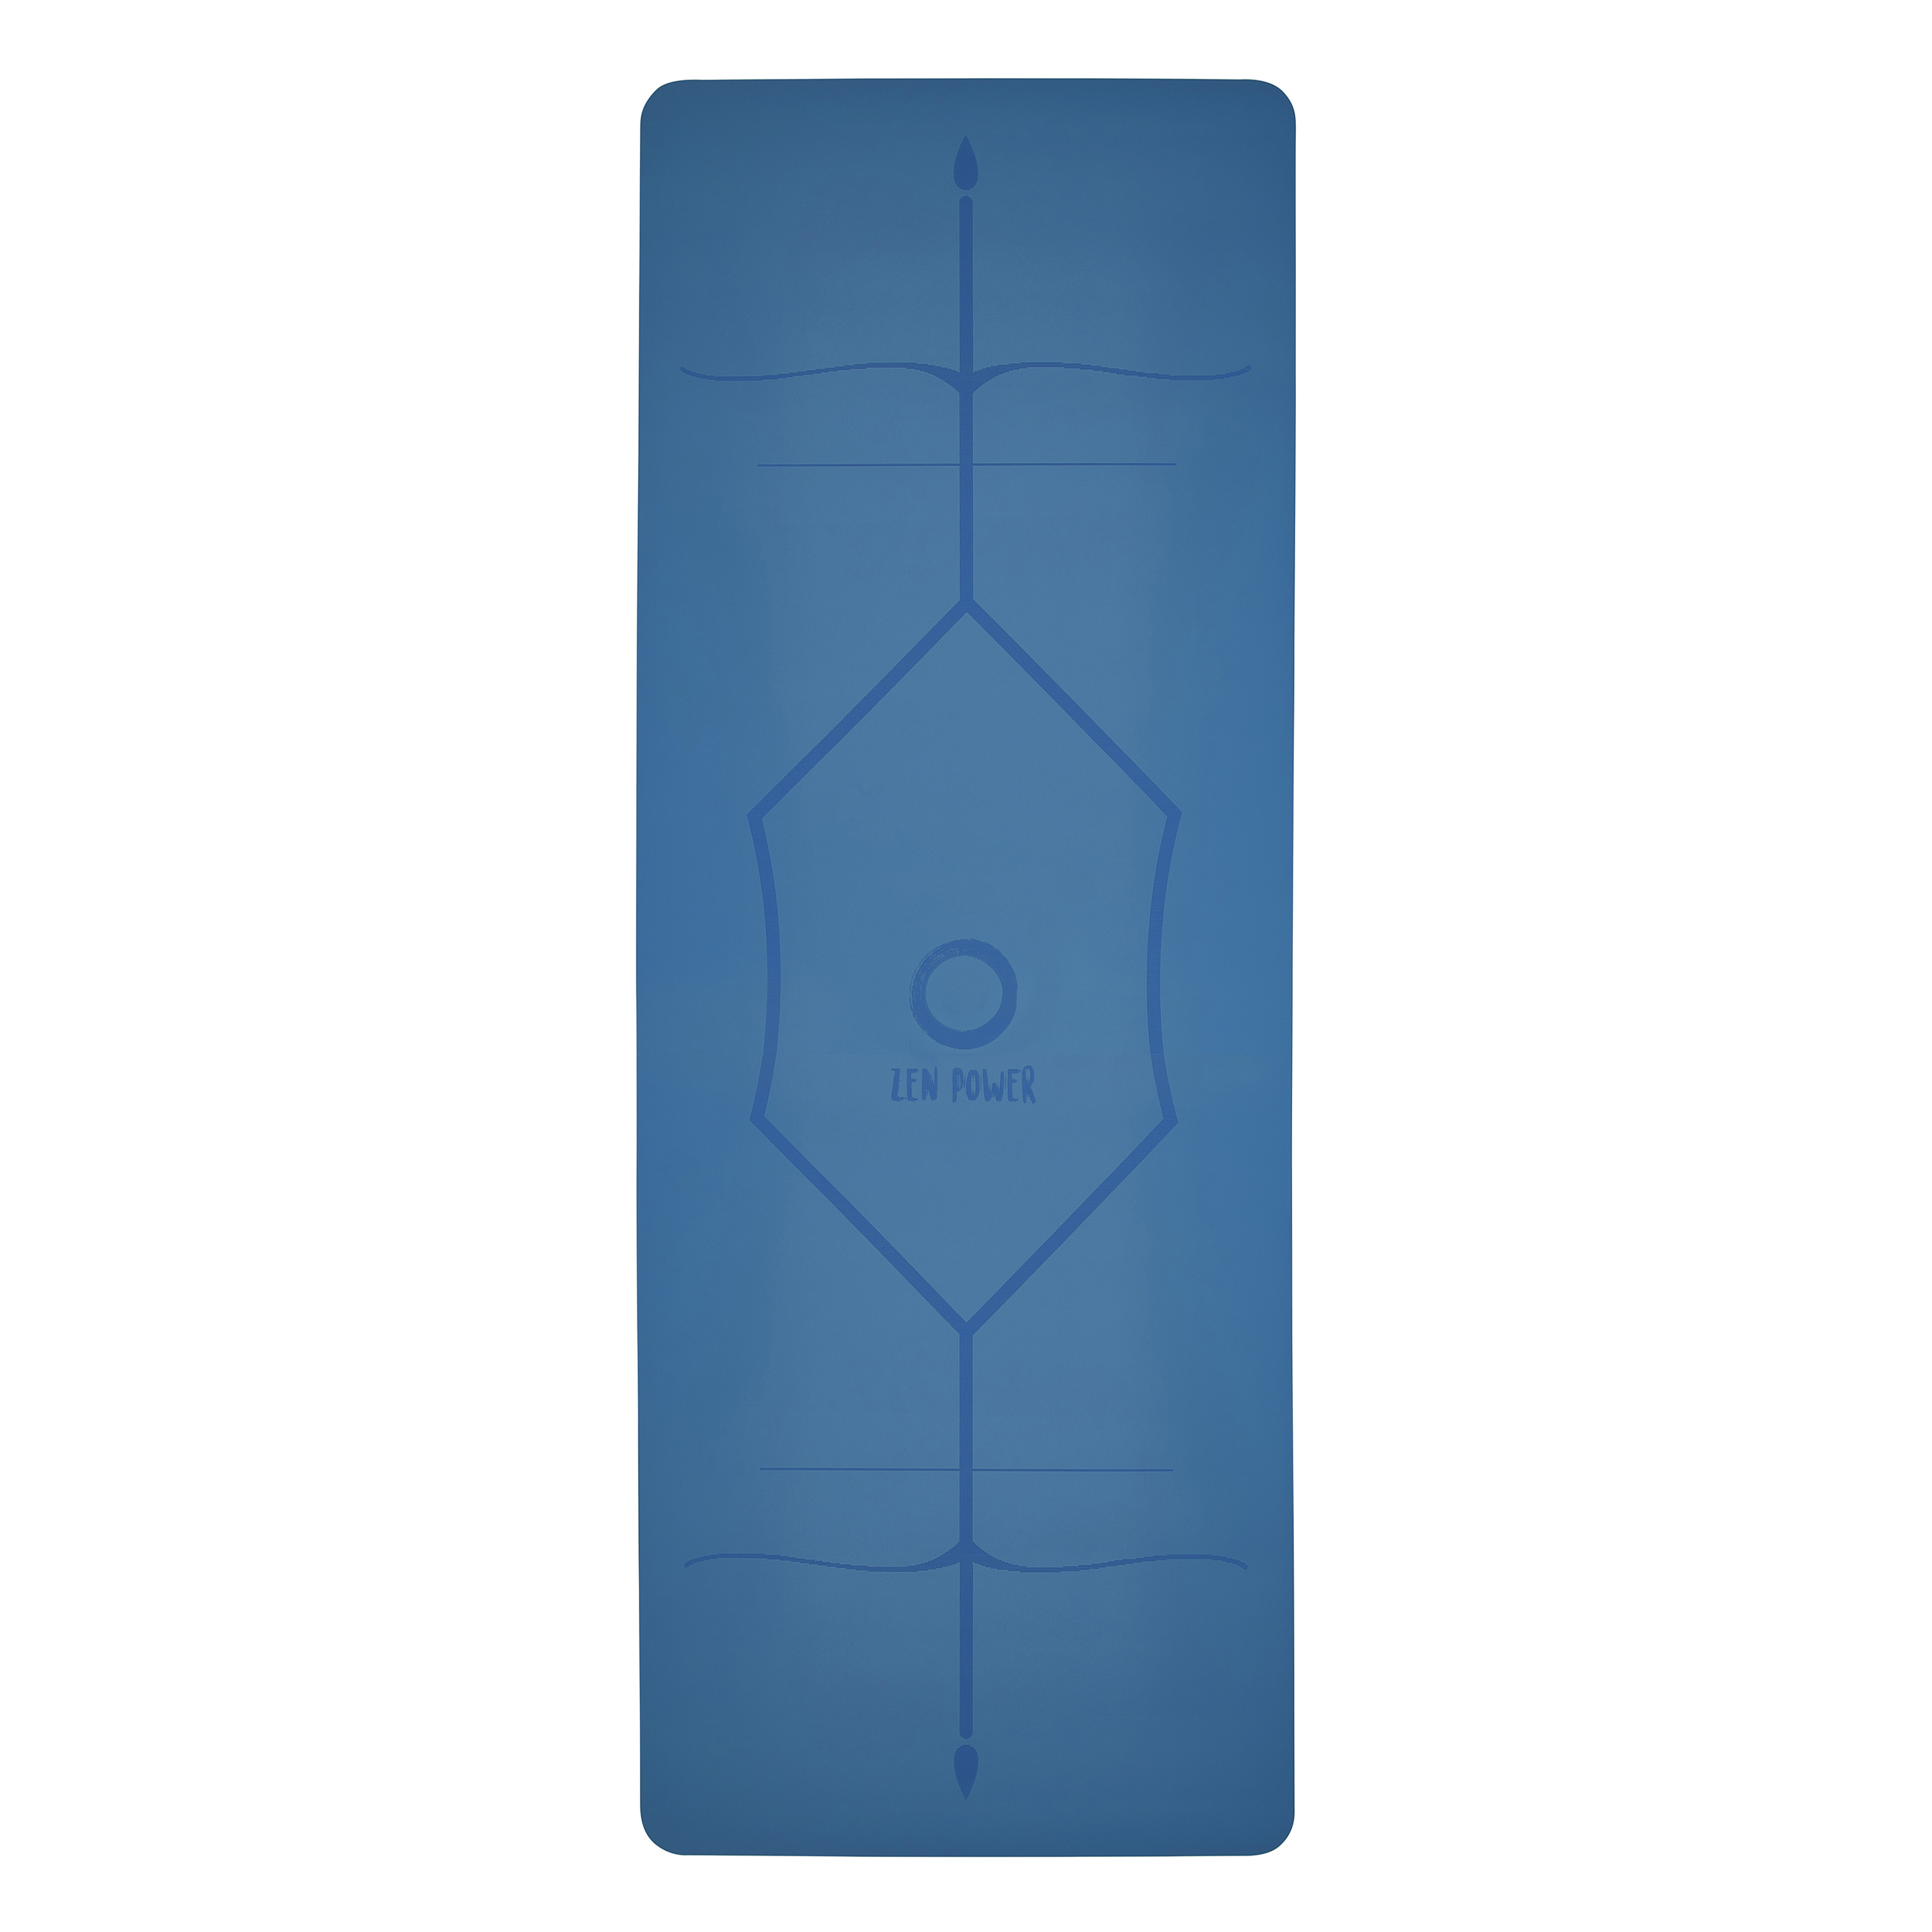 ZenPower Yogamatte Mandala - Blau